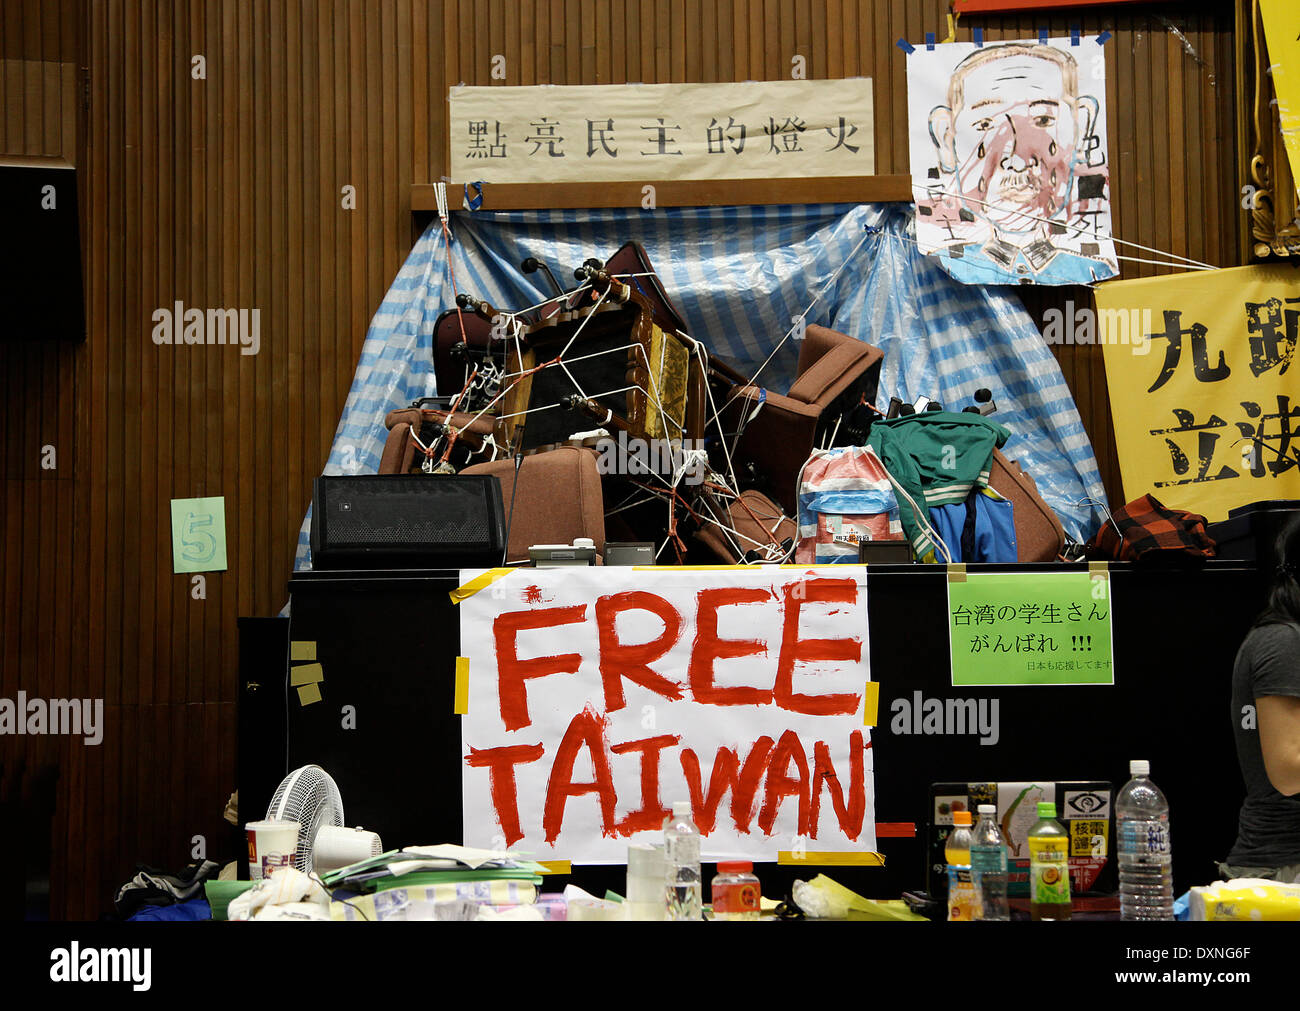 Free Taiwan, transparent Stock Photo